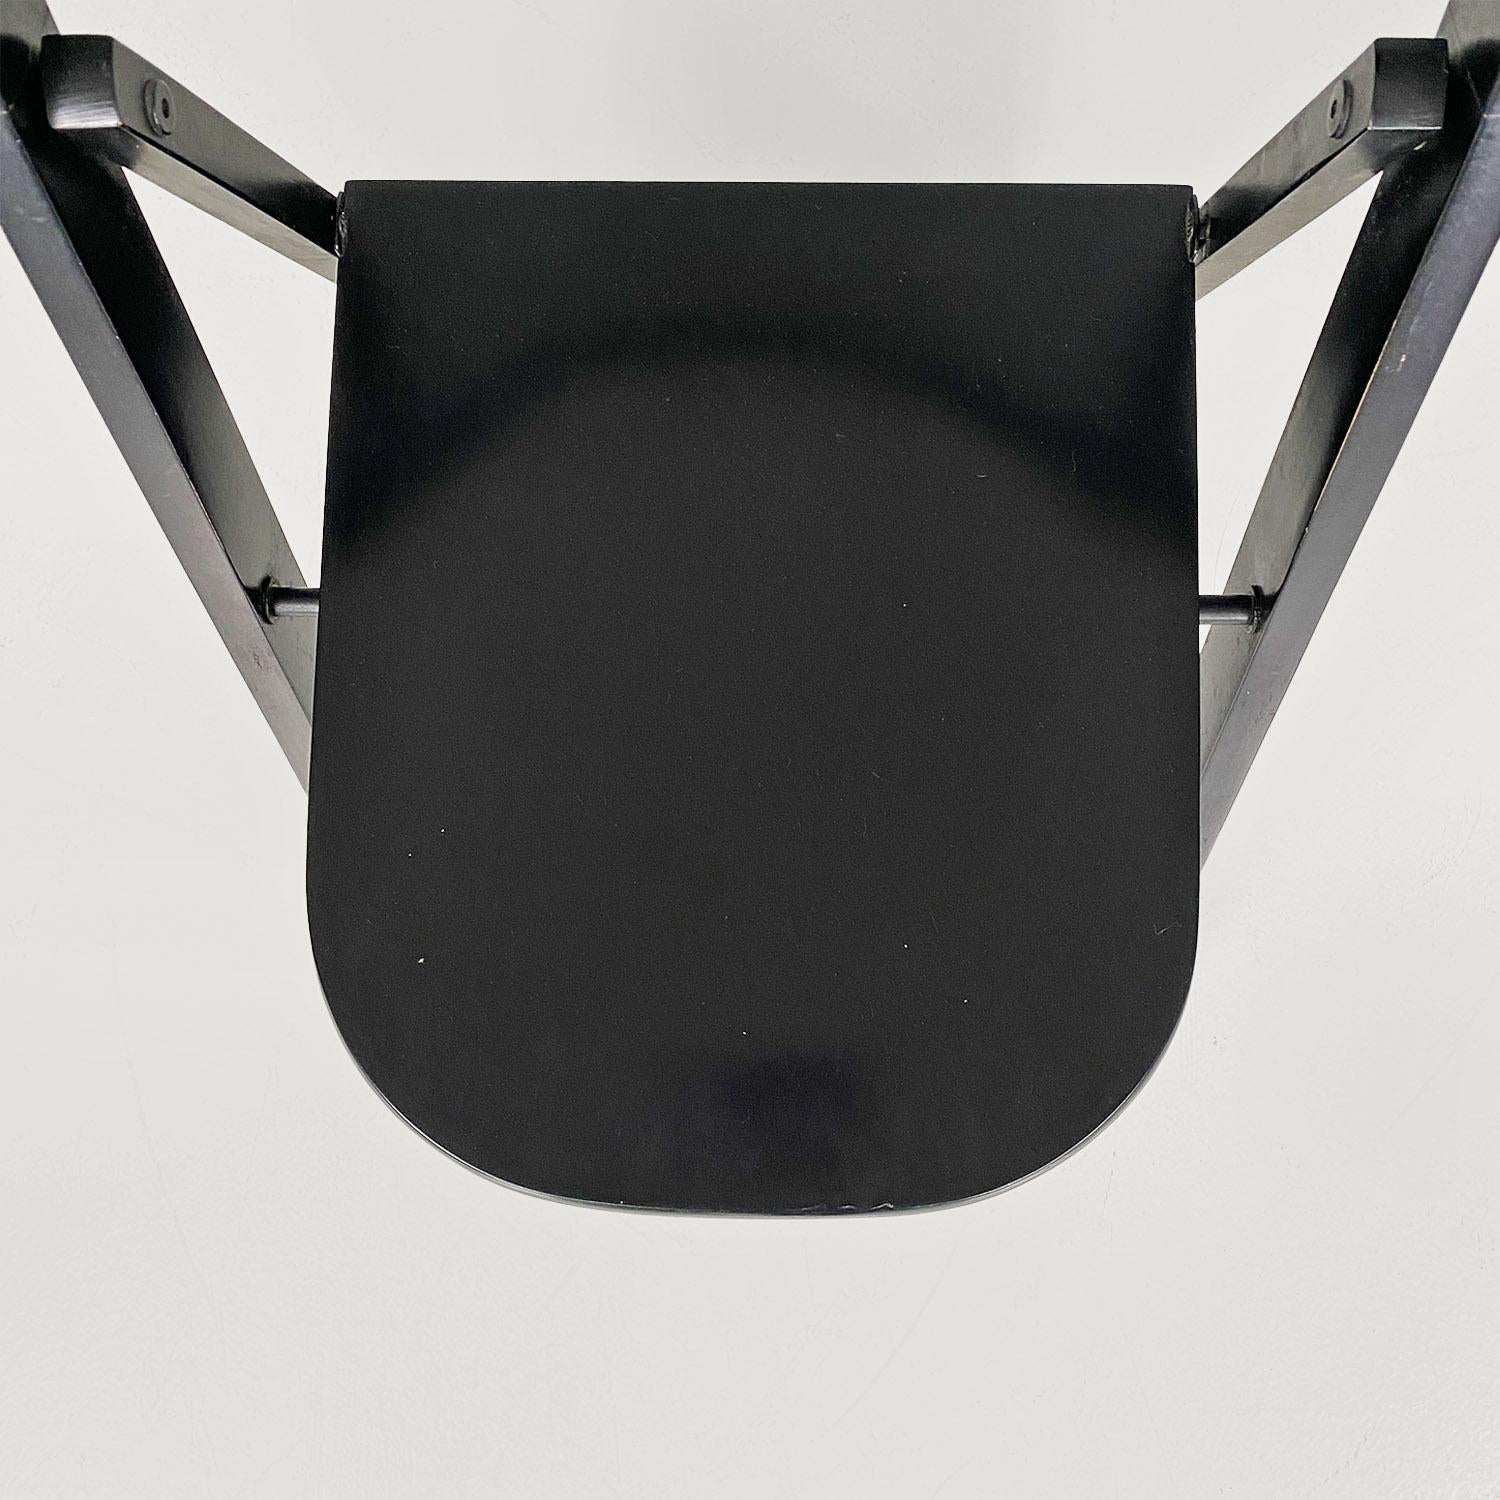 Italian folding chair, black wood, Achille and Pier Giacomo Castiglioni 1960s For Sale 2